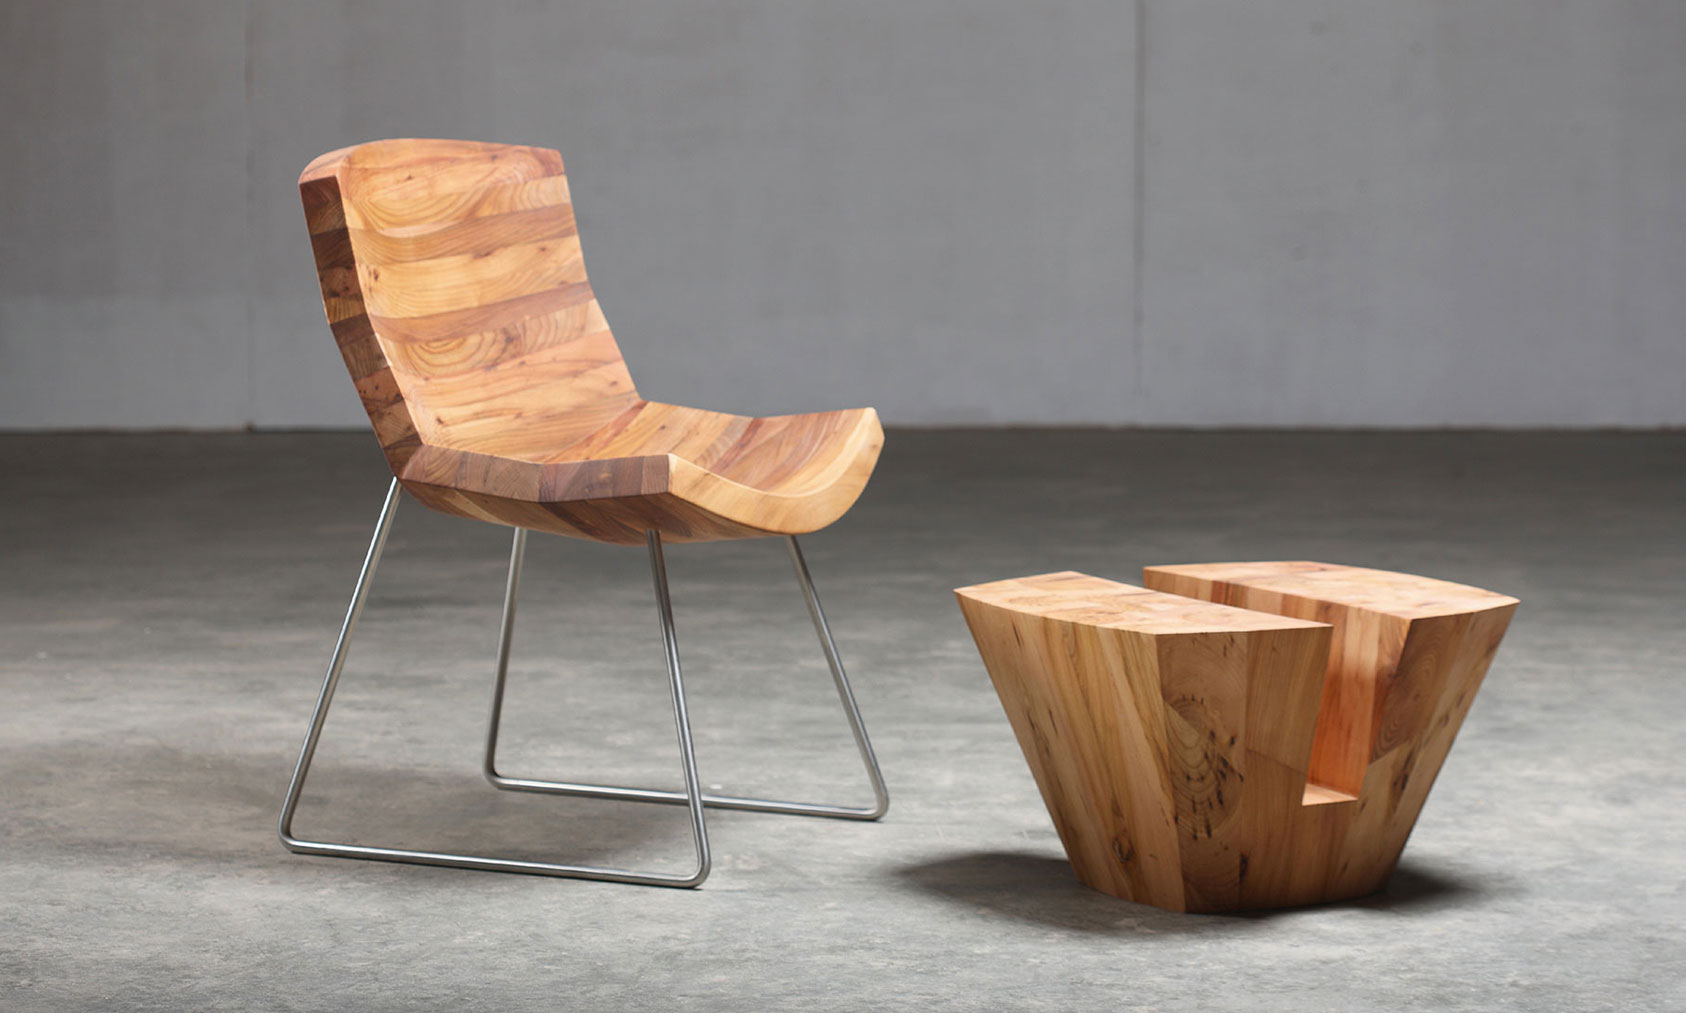 Solid Oak Chair Furniture Design photo - 10